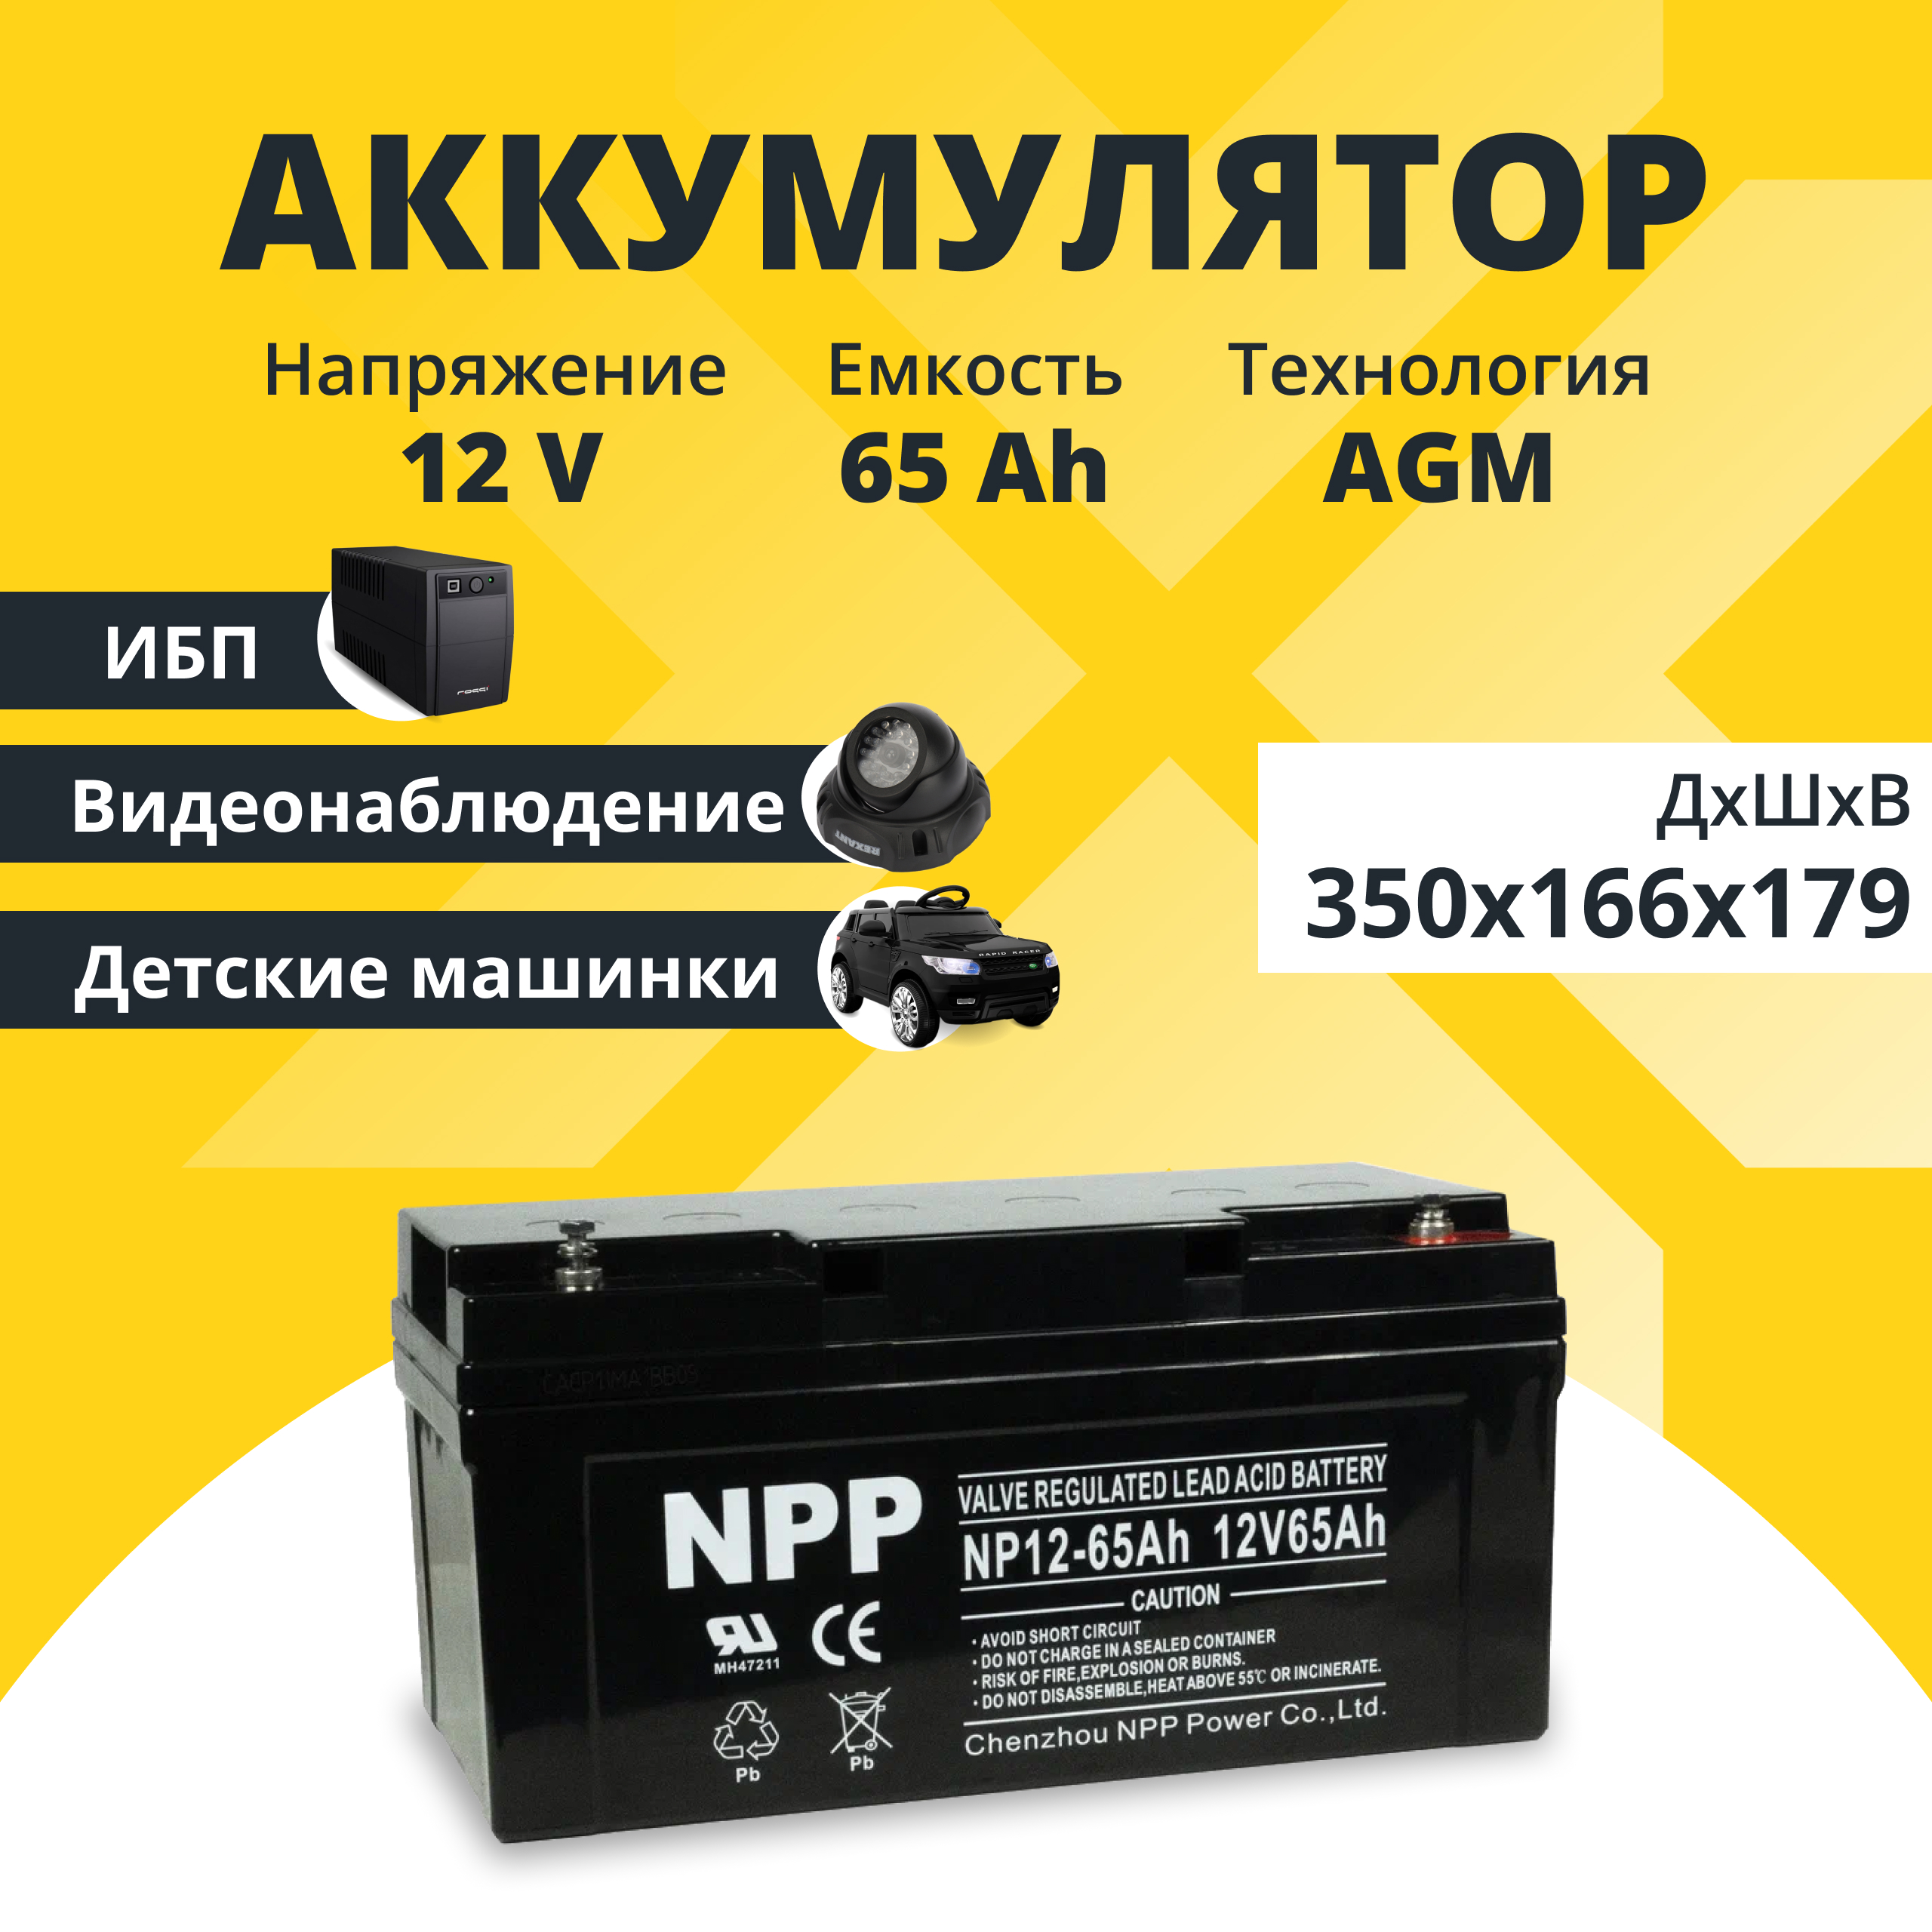 Аккумулятор для ибп NPP 12v 65Ah M6/T14 NP12-65Ah